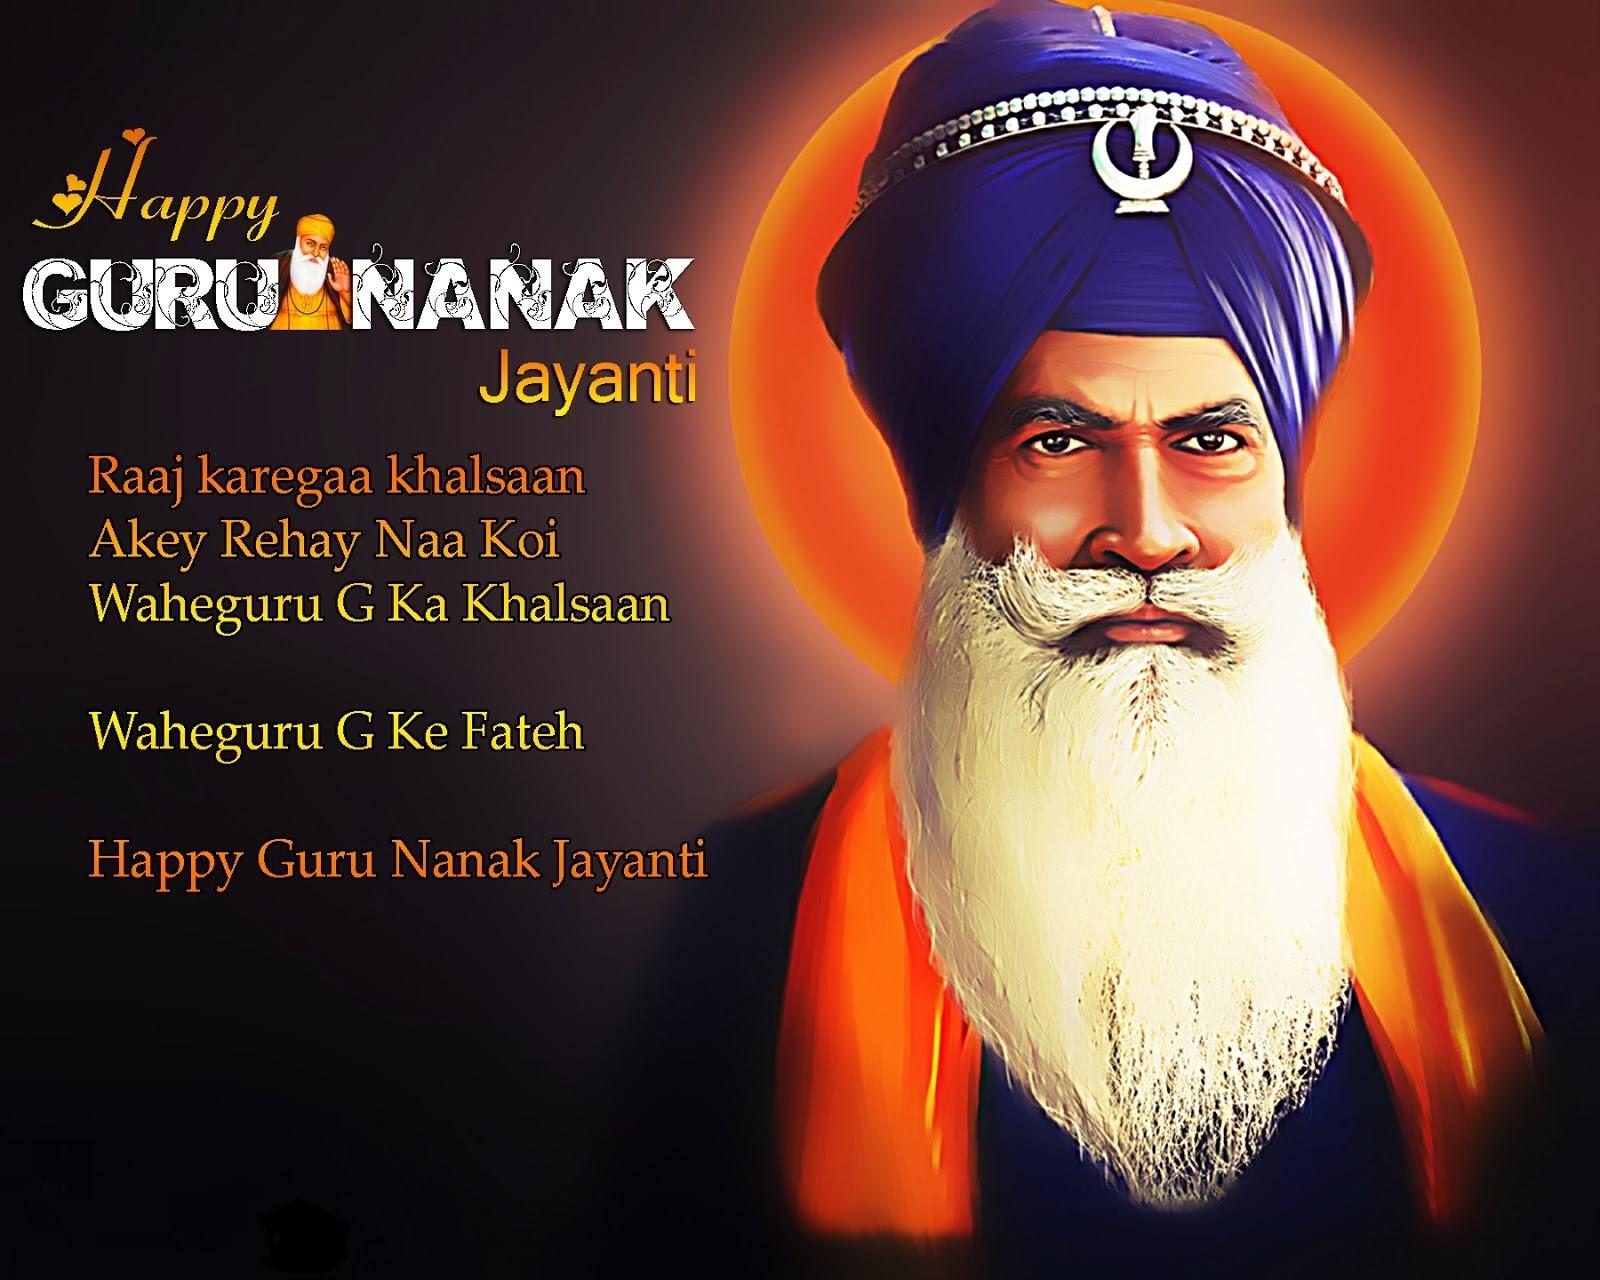 Happy Guru Nanak Jayanti (17th November 2013) HD Image and Picture